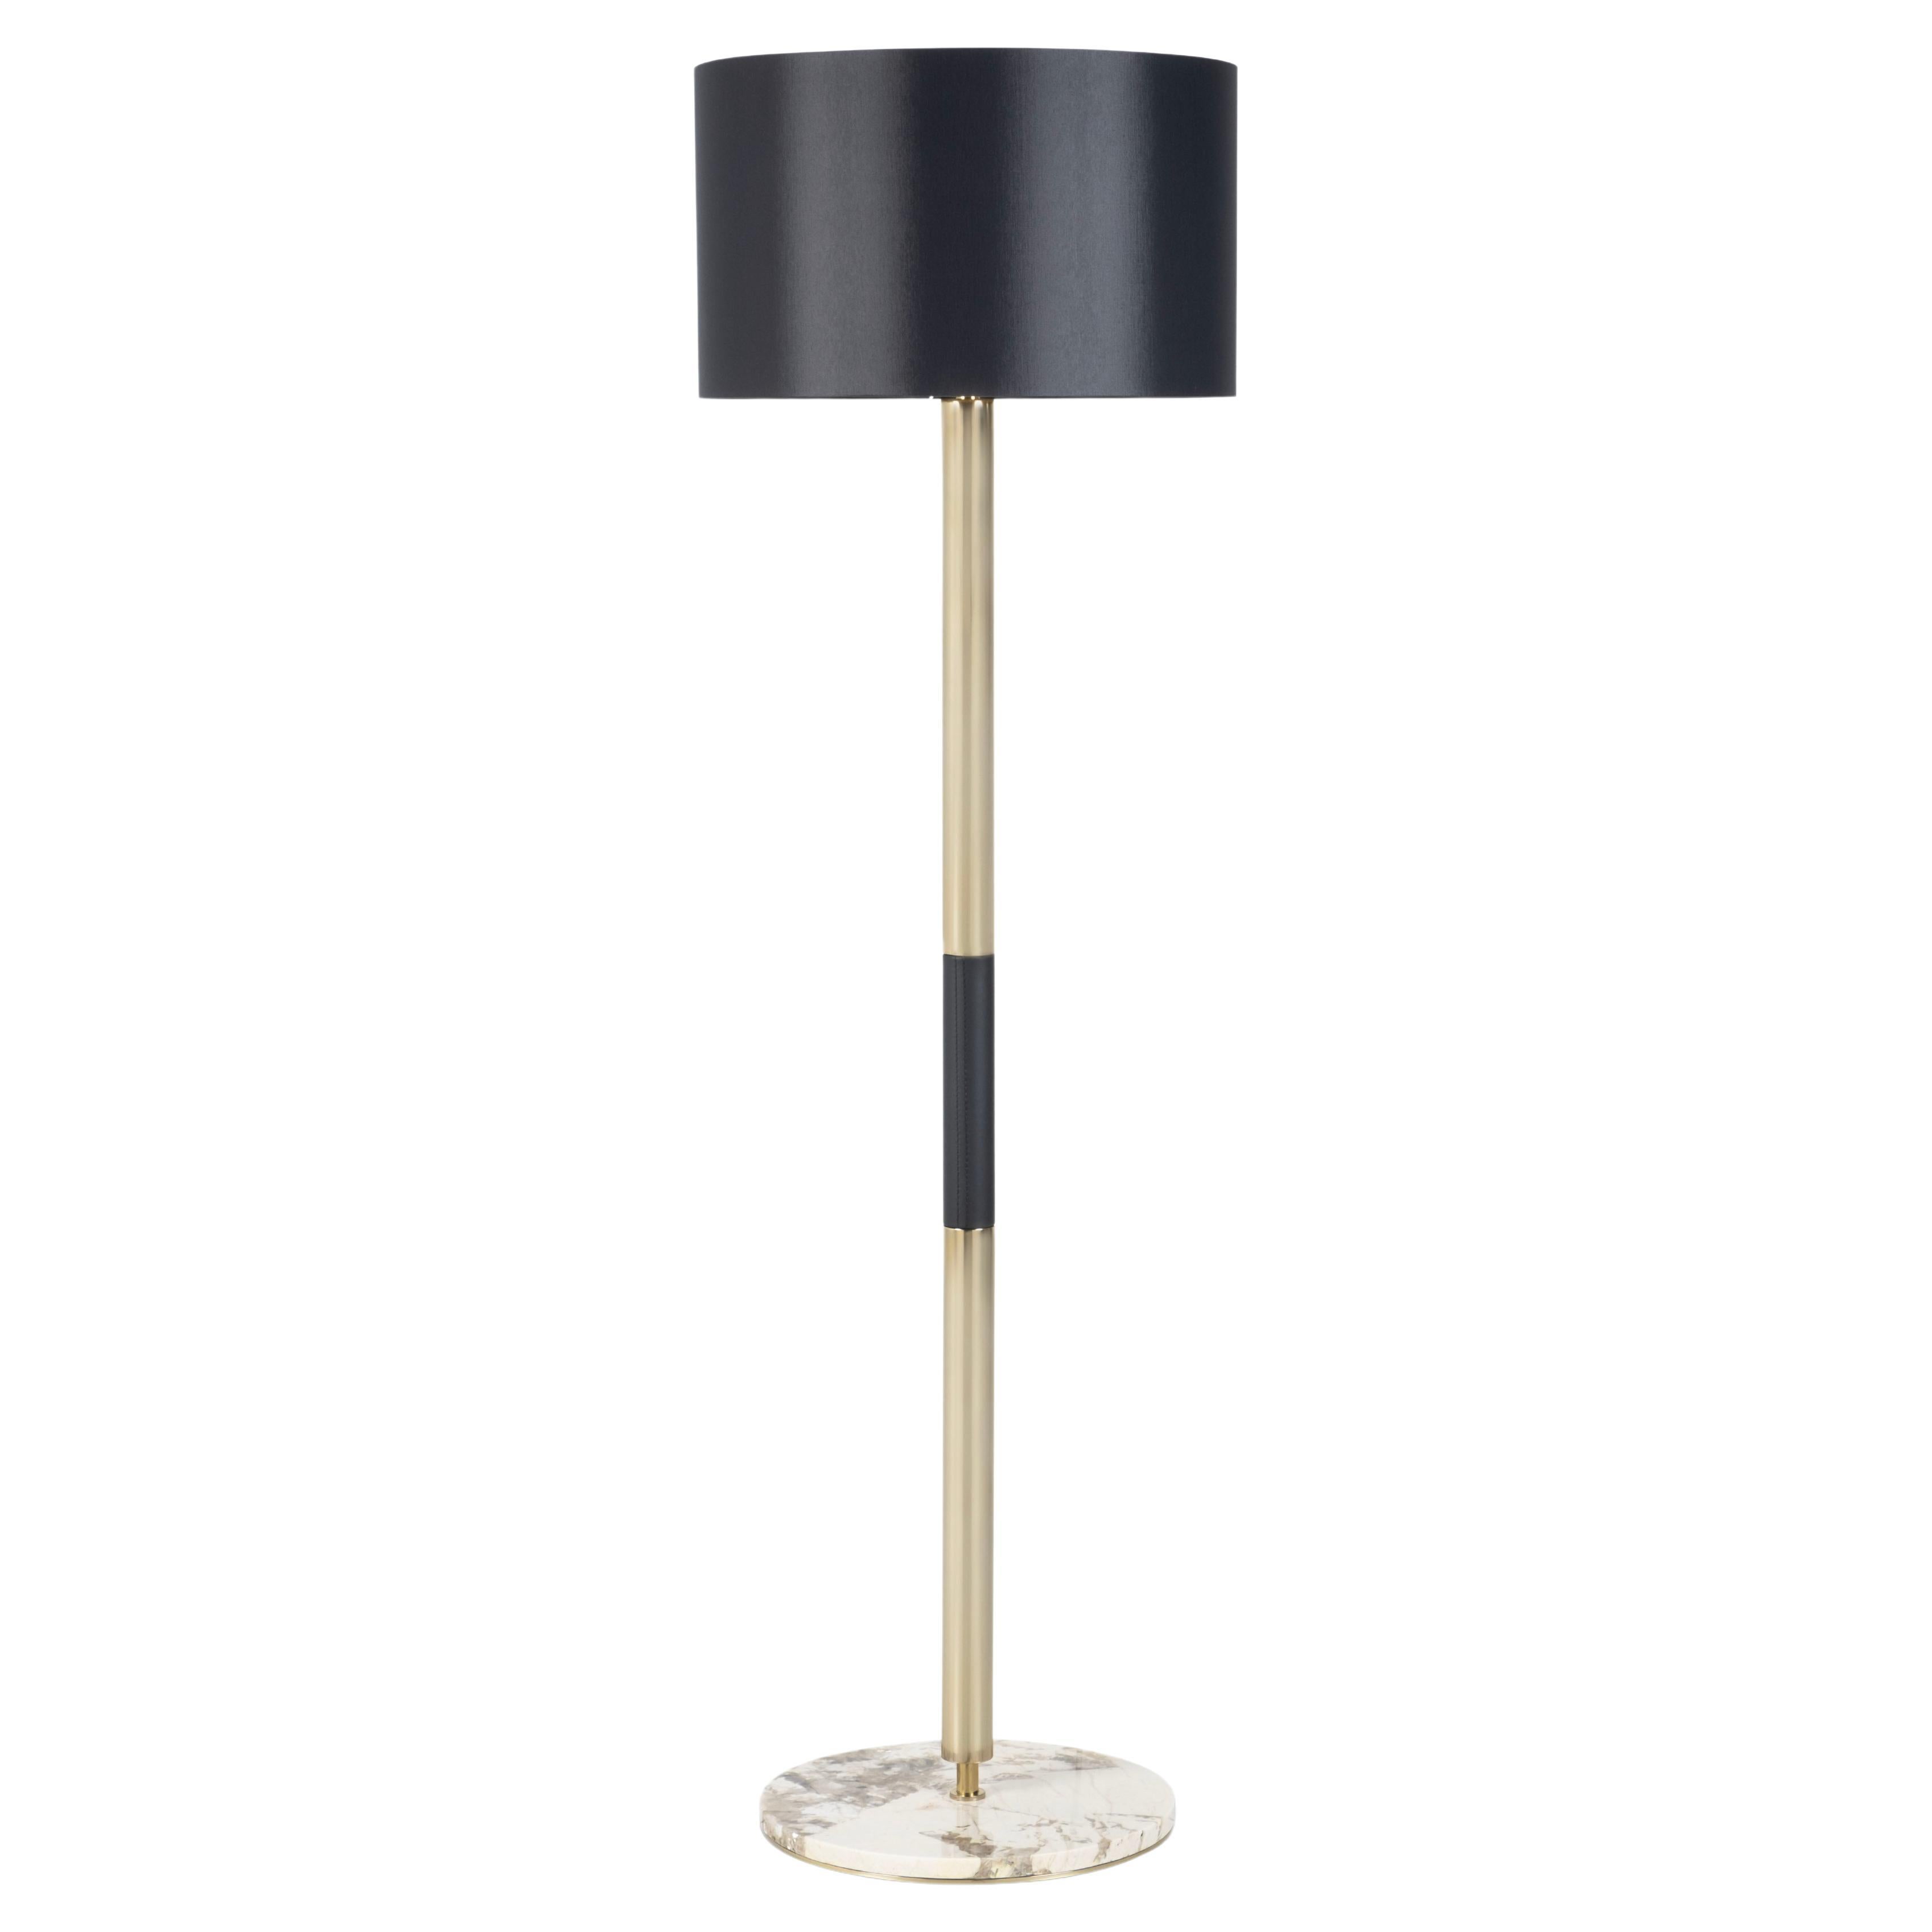 The Moderns Floor Lamp Stainless Black Shade Handmade in Portugal by Greenapple en vente